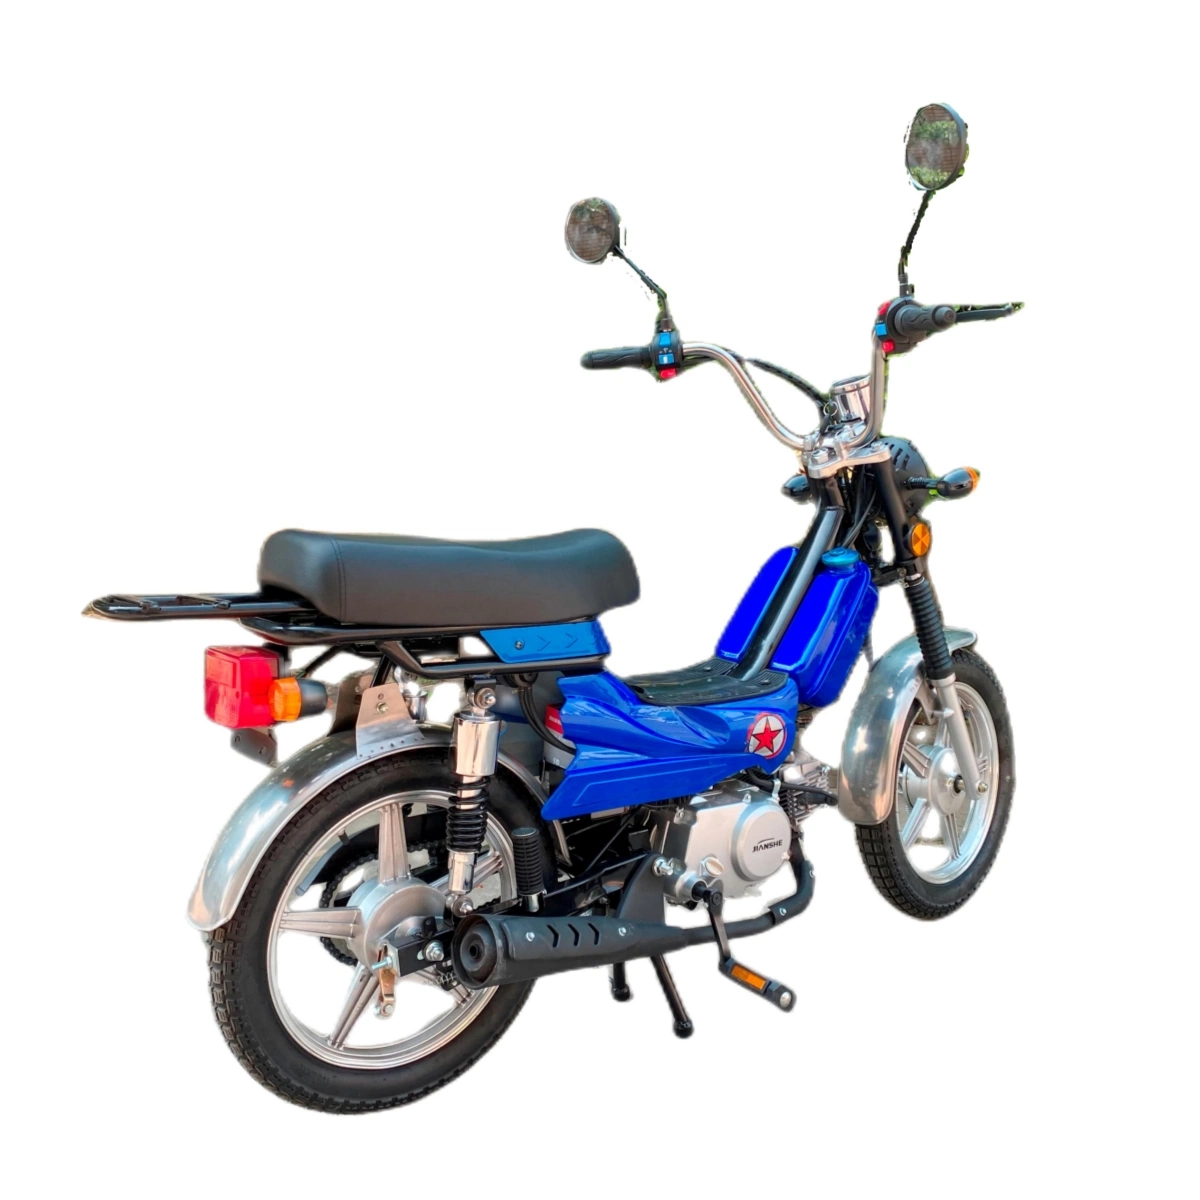 China Hersteller Heißer Verkauf Rabatt Classic EEC 50cc Benzin Motorrad, Mini Motorrad, kinderleicht Moped, Cub Motorrad, Gas Street Scooter Bike